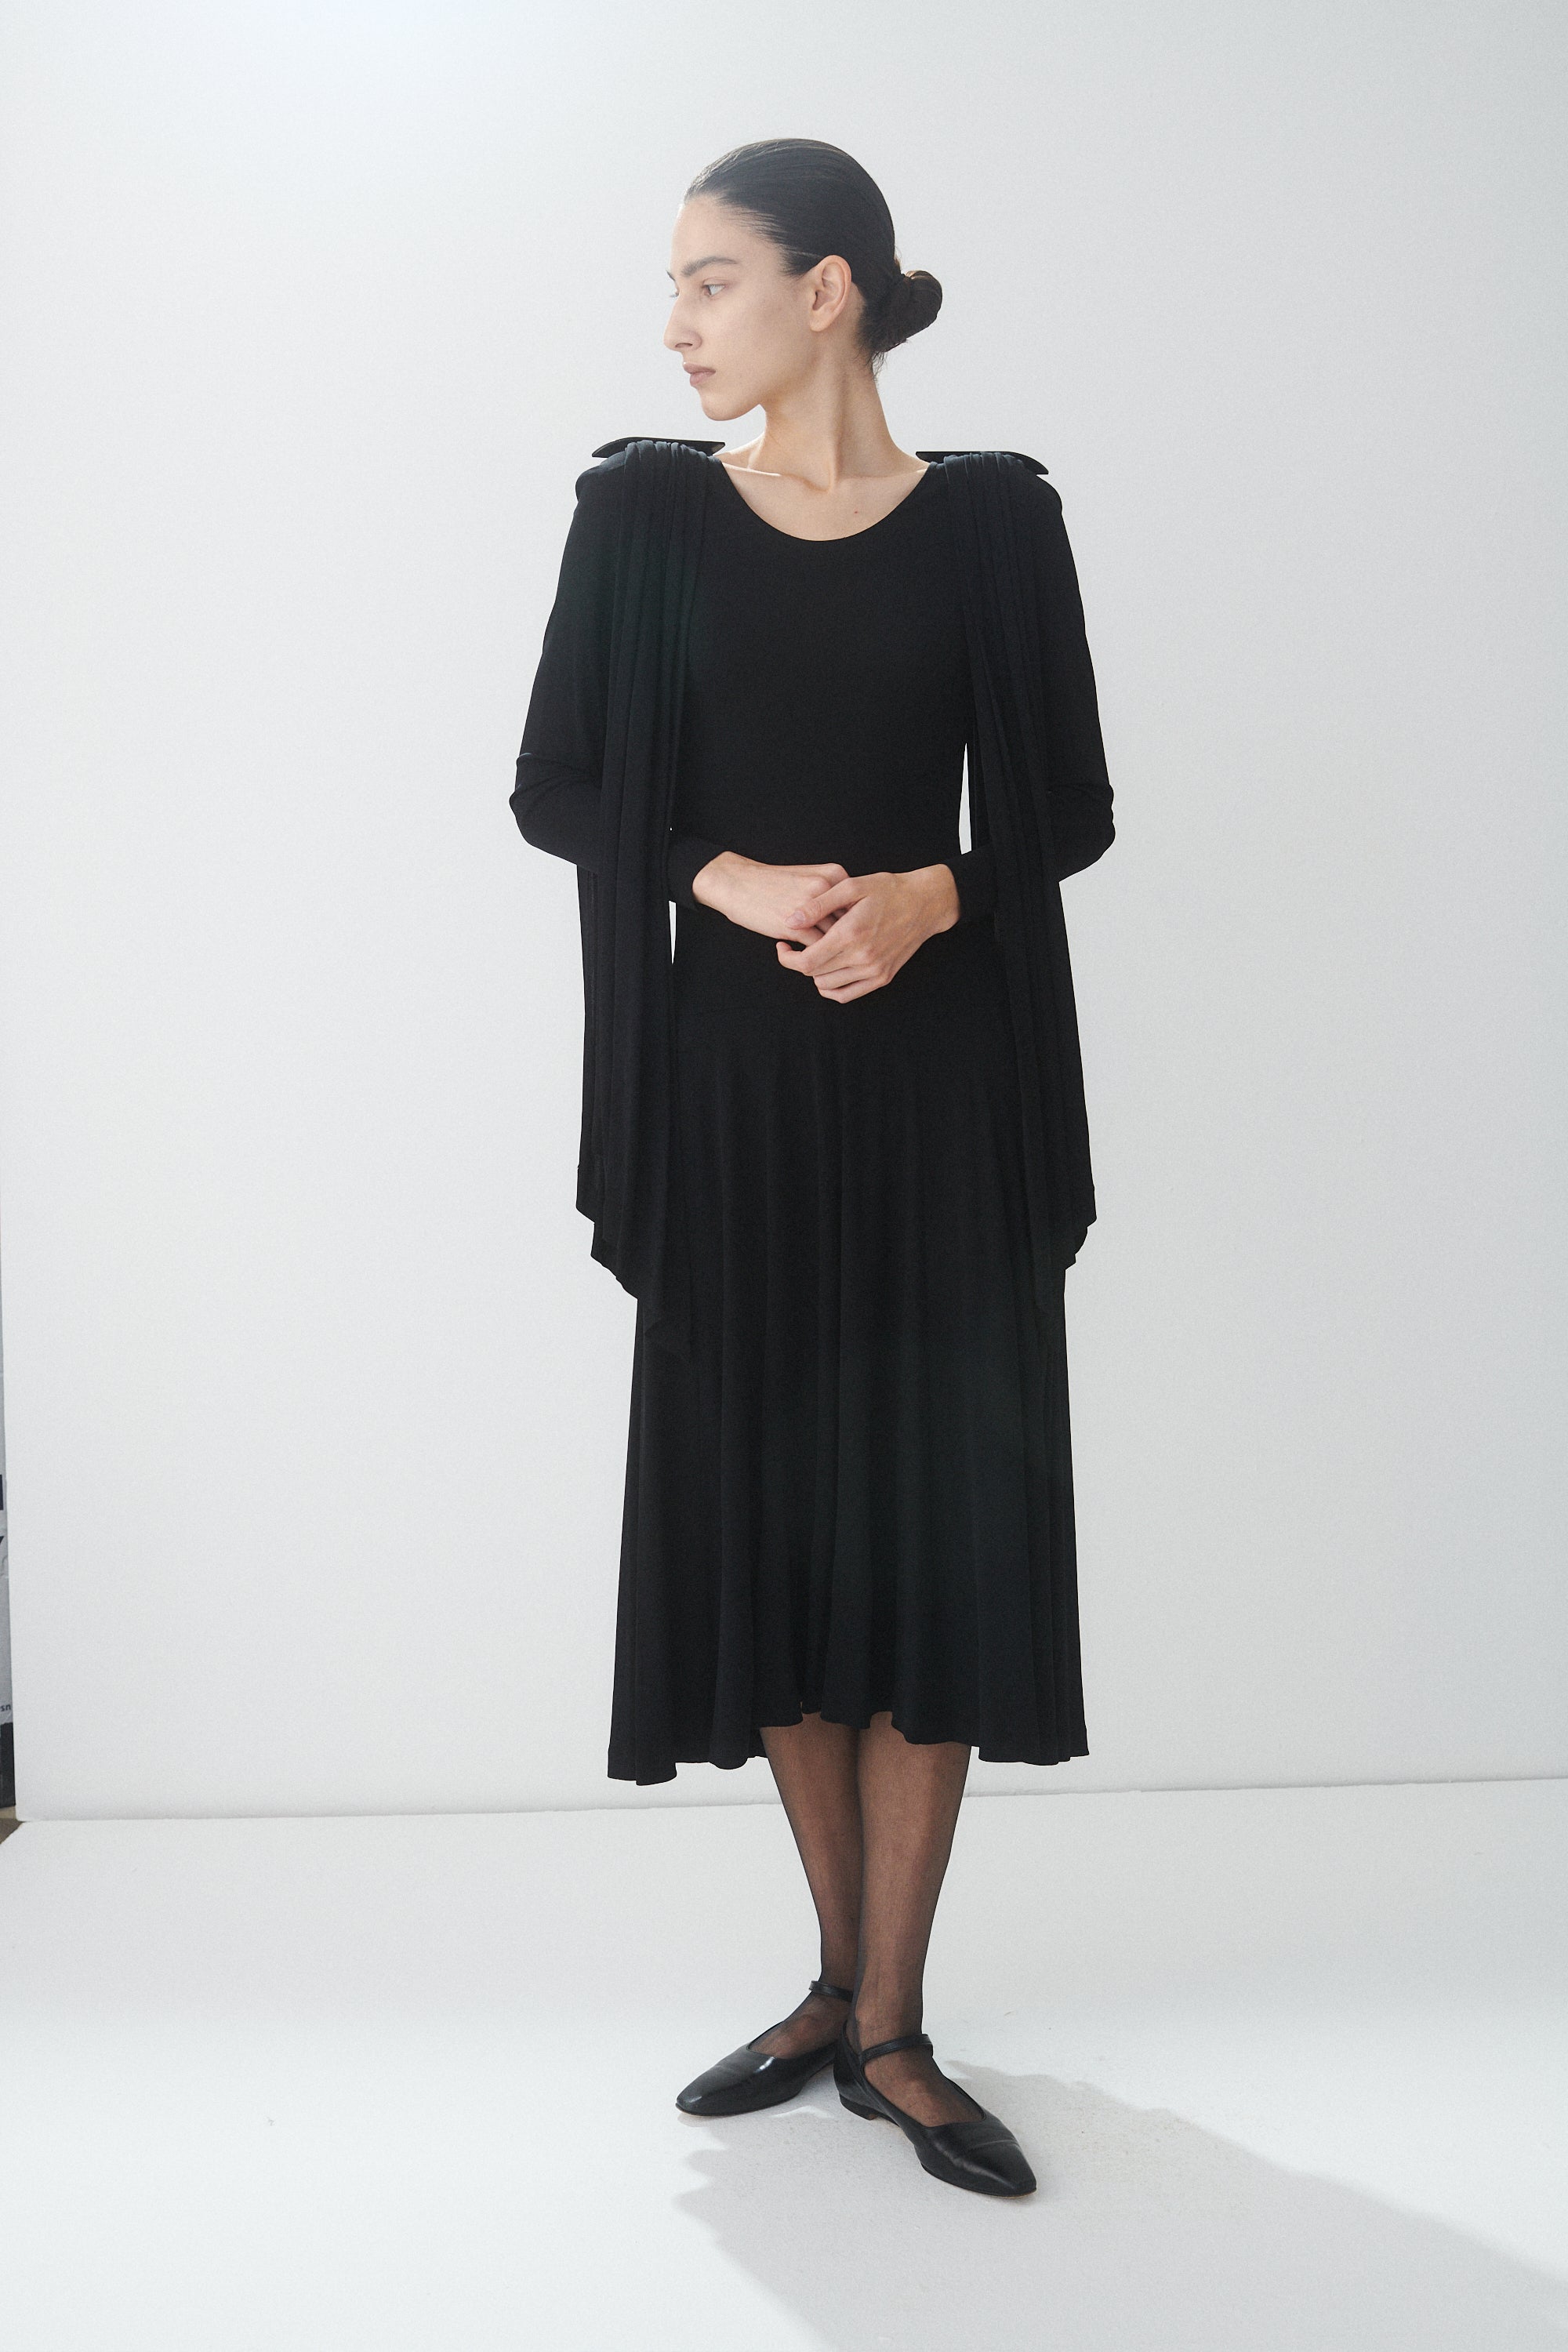 Jean Muir Black Draped Dress - Desert Vintage